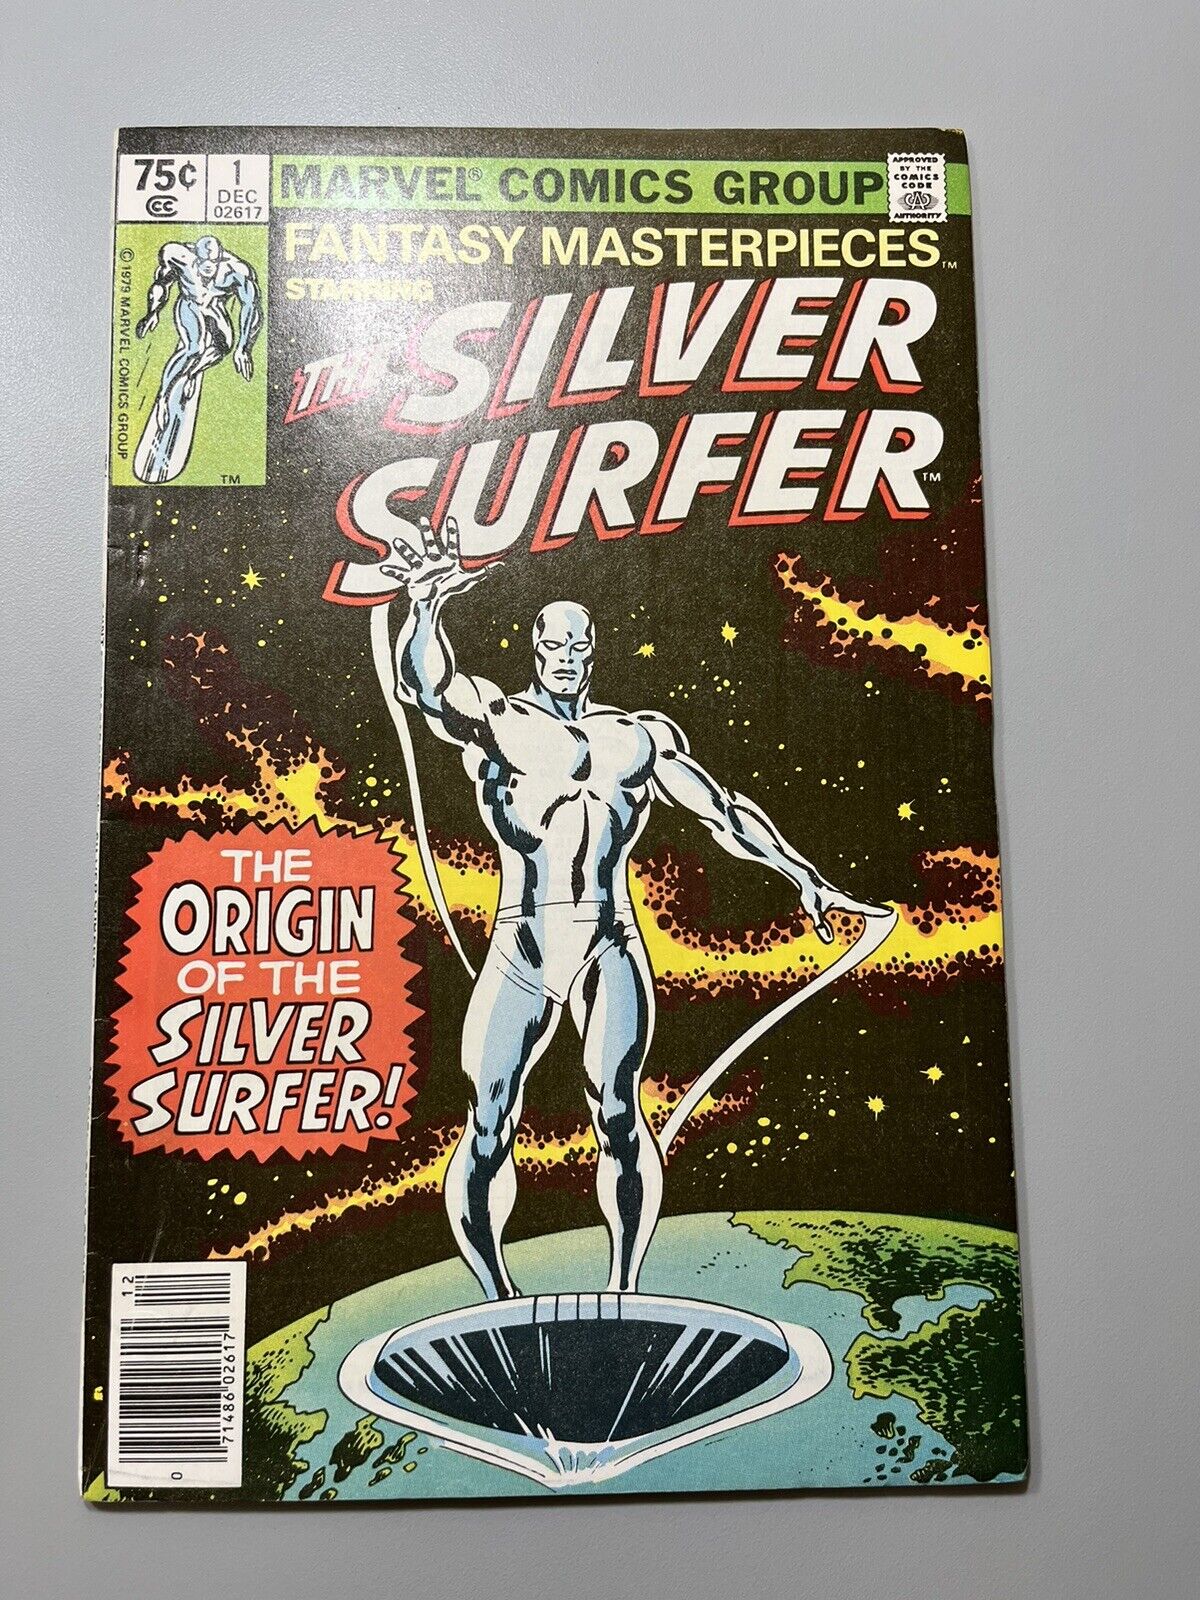 Fantasy Masterpieces Starring The Silver Surfer #1 - Origin Story *VF 8.0 range*